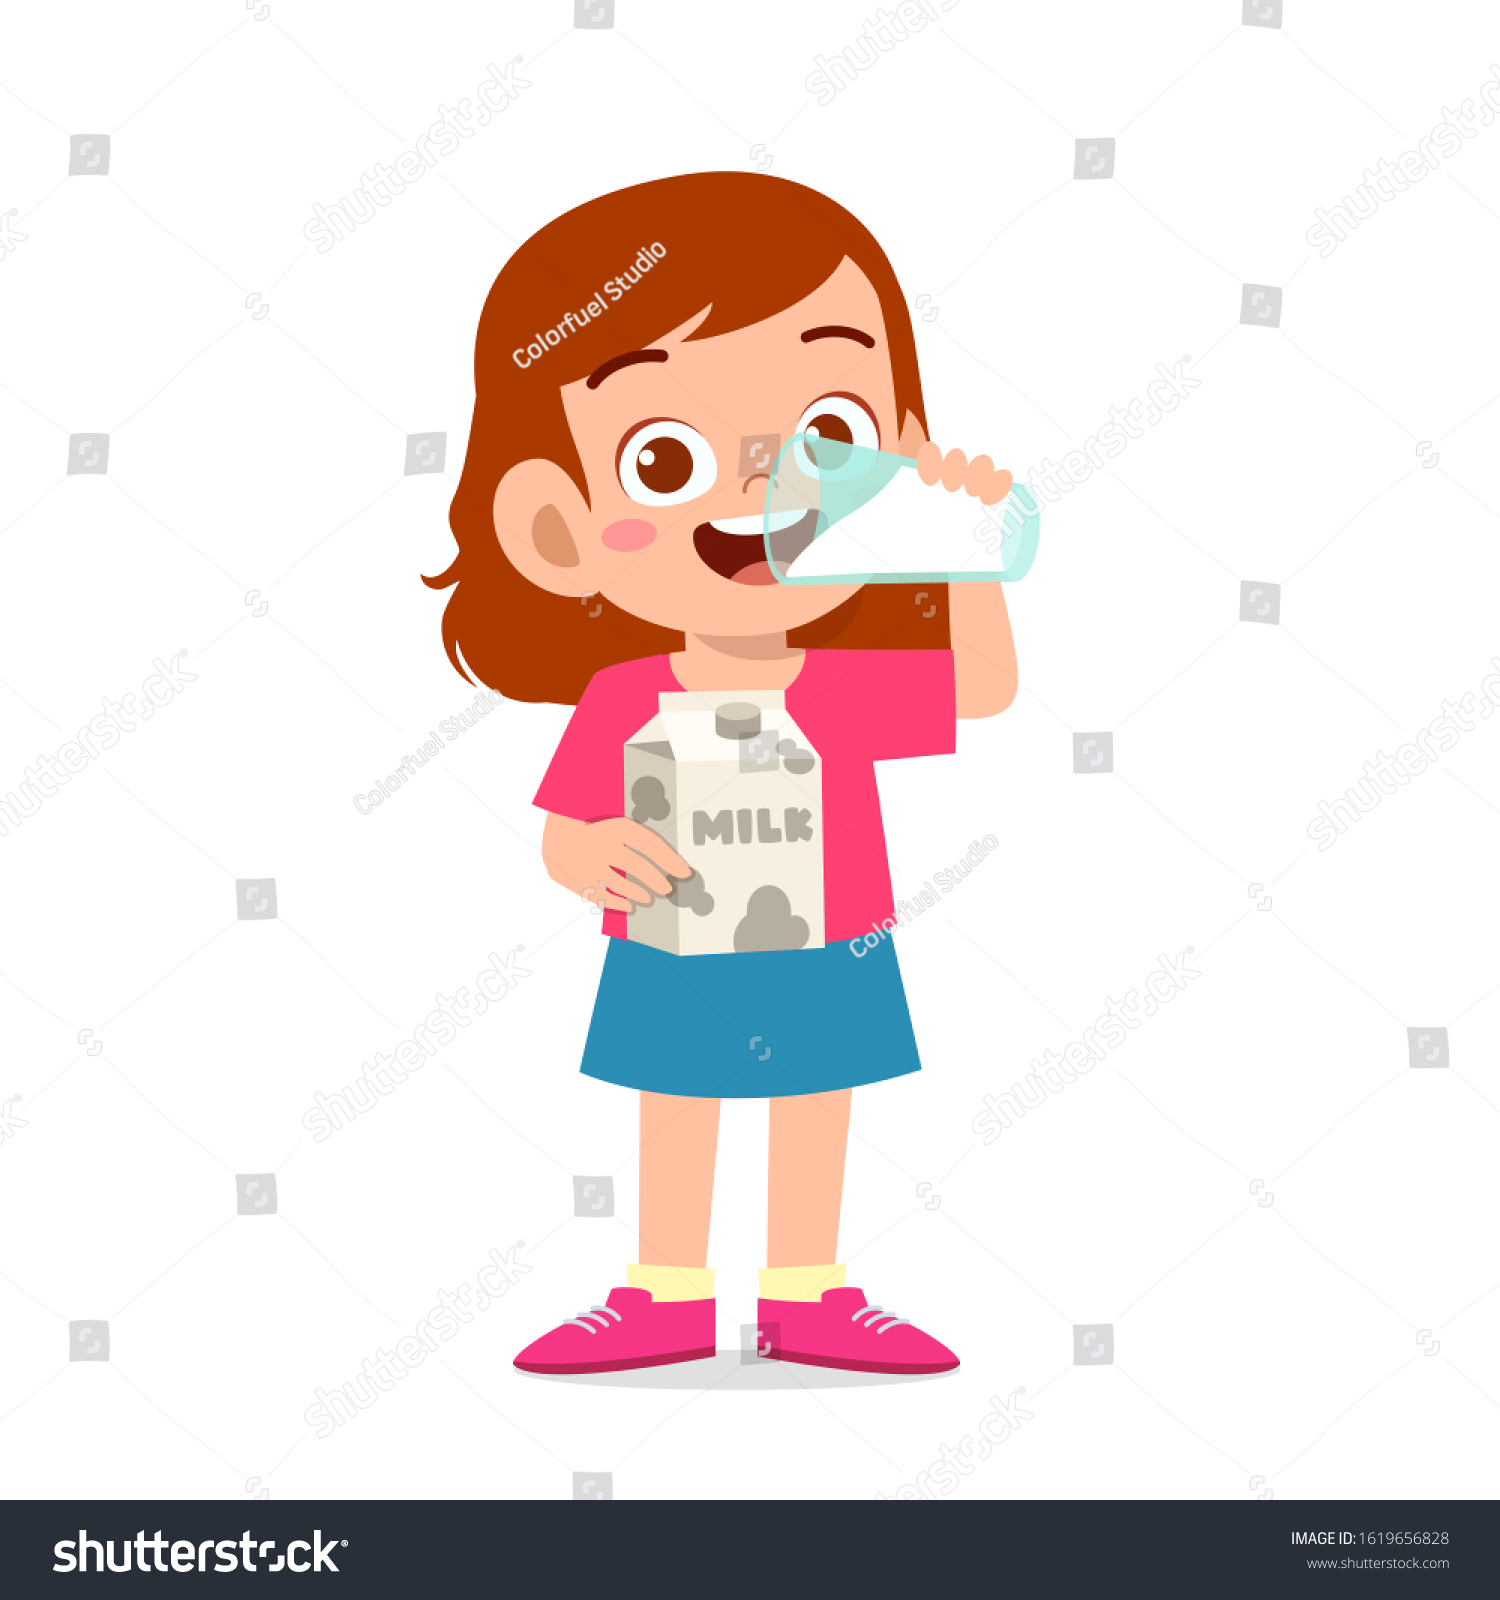 1,538 Little girl drinking milk Stock Illustrations, Images & Vectors ...